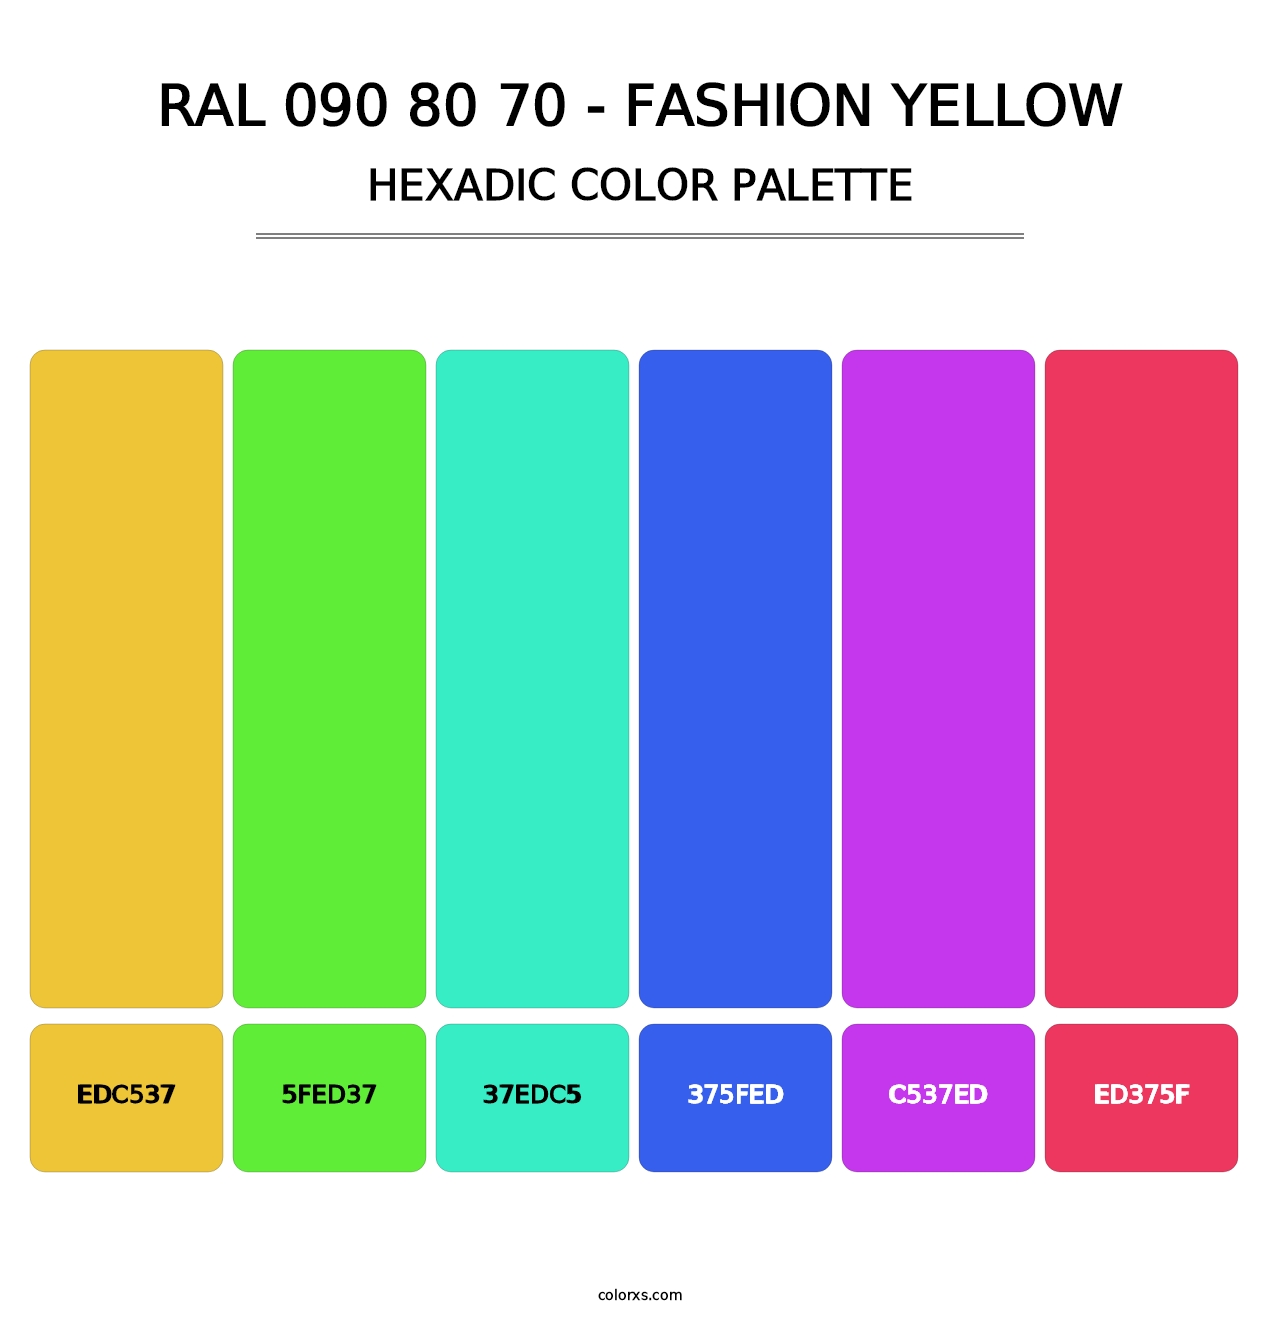 RAL 090 80 70 - Fashion Yellow - Hexadic Color Palette